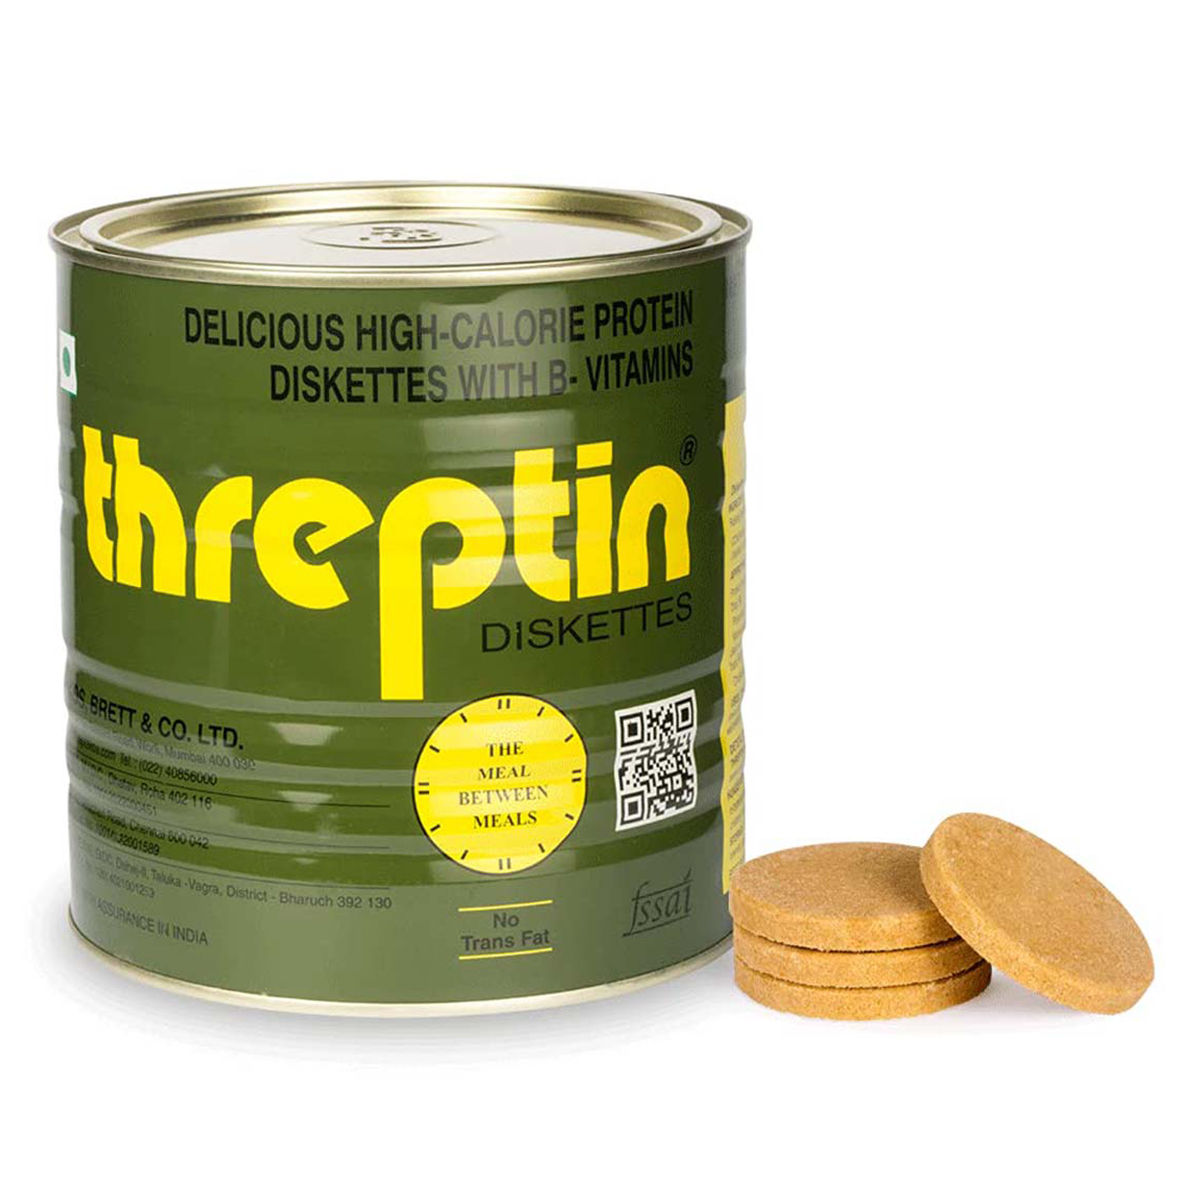 Buy Threptin High-Calorie Protein Vanilla Flavour Diskettes, 1 kg Online